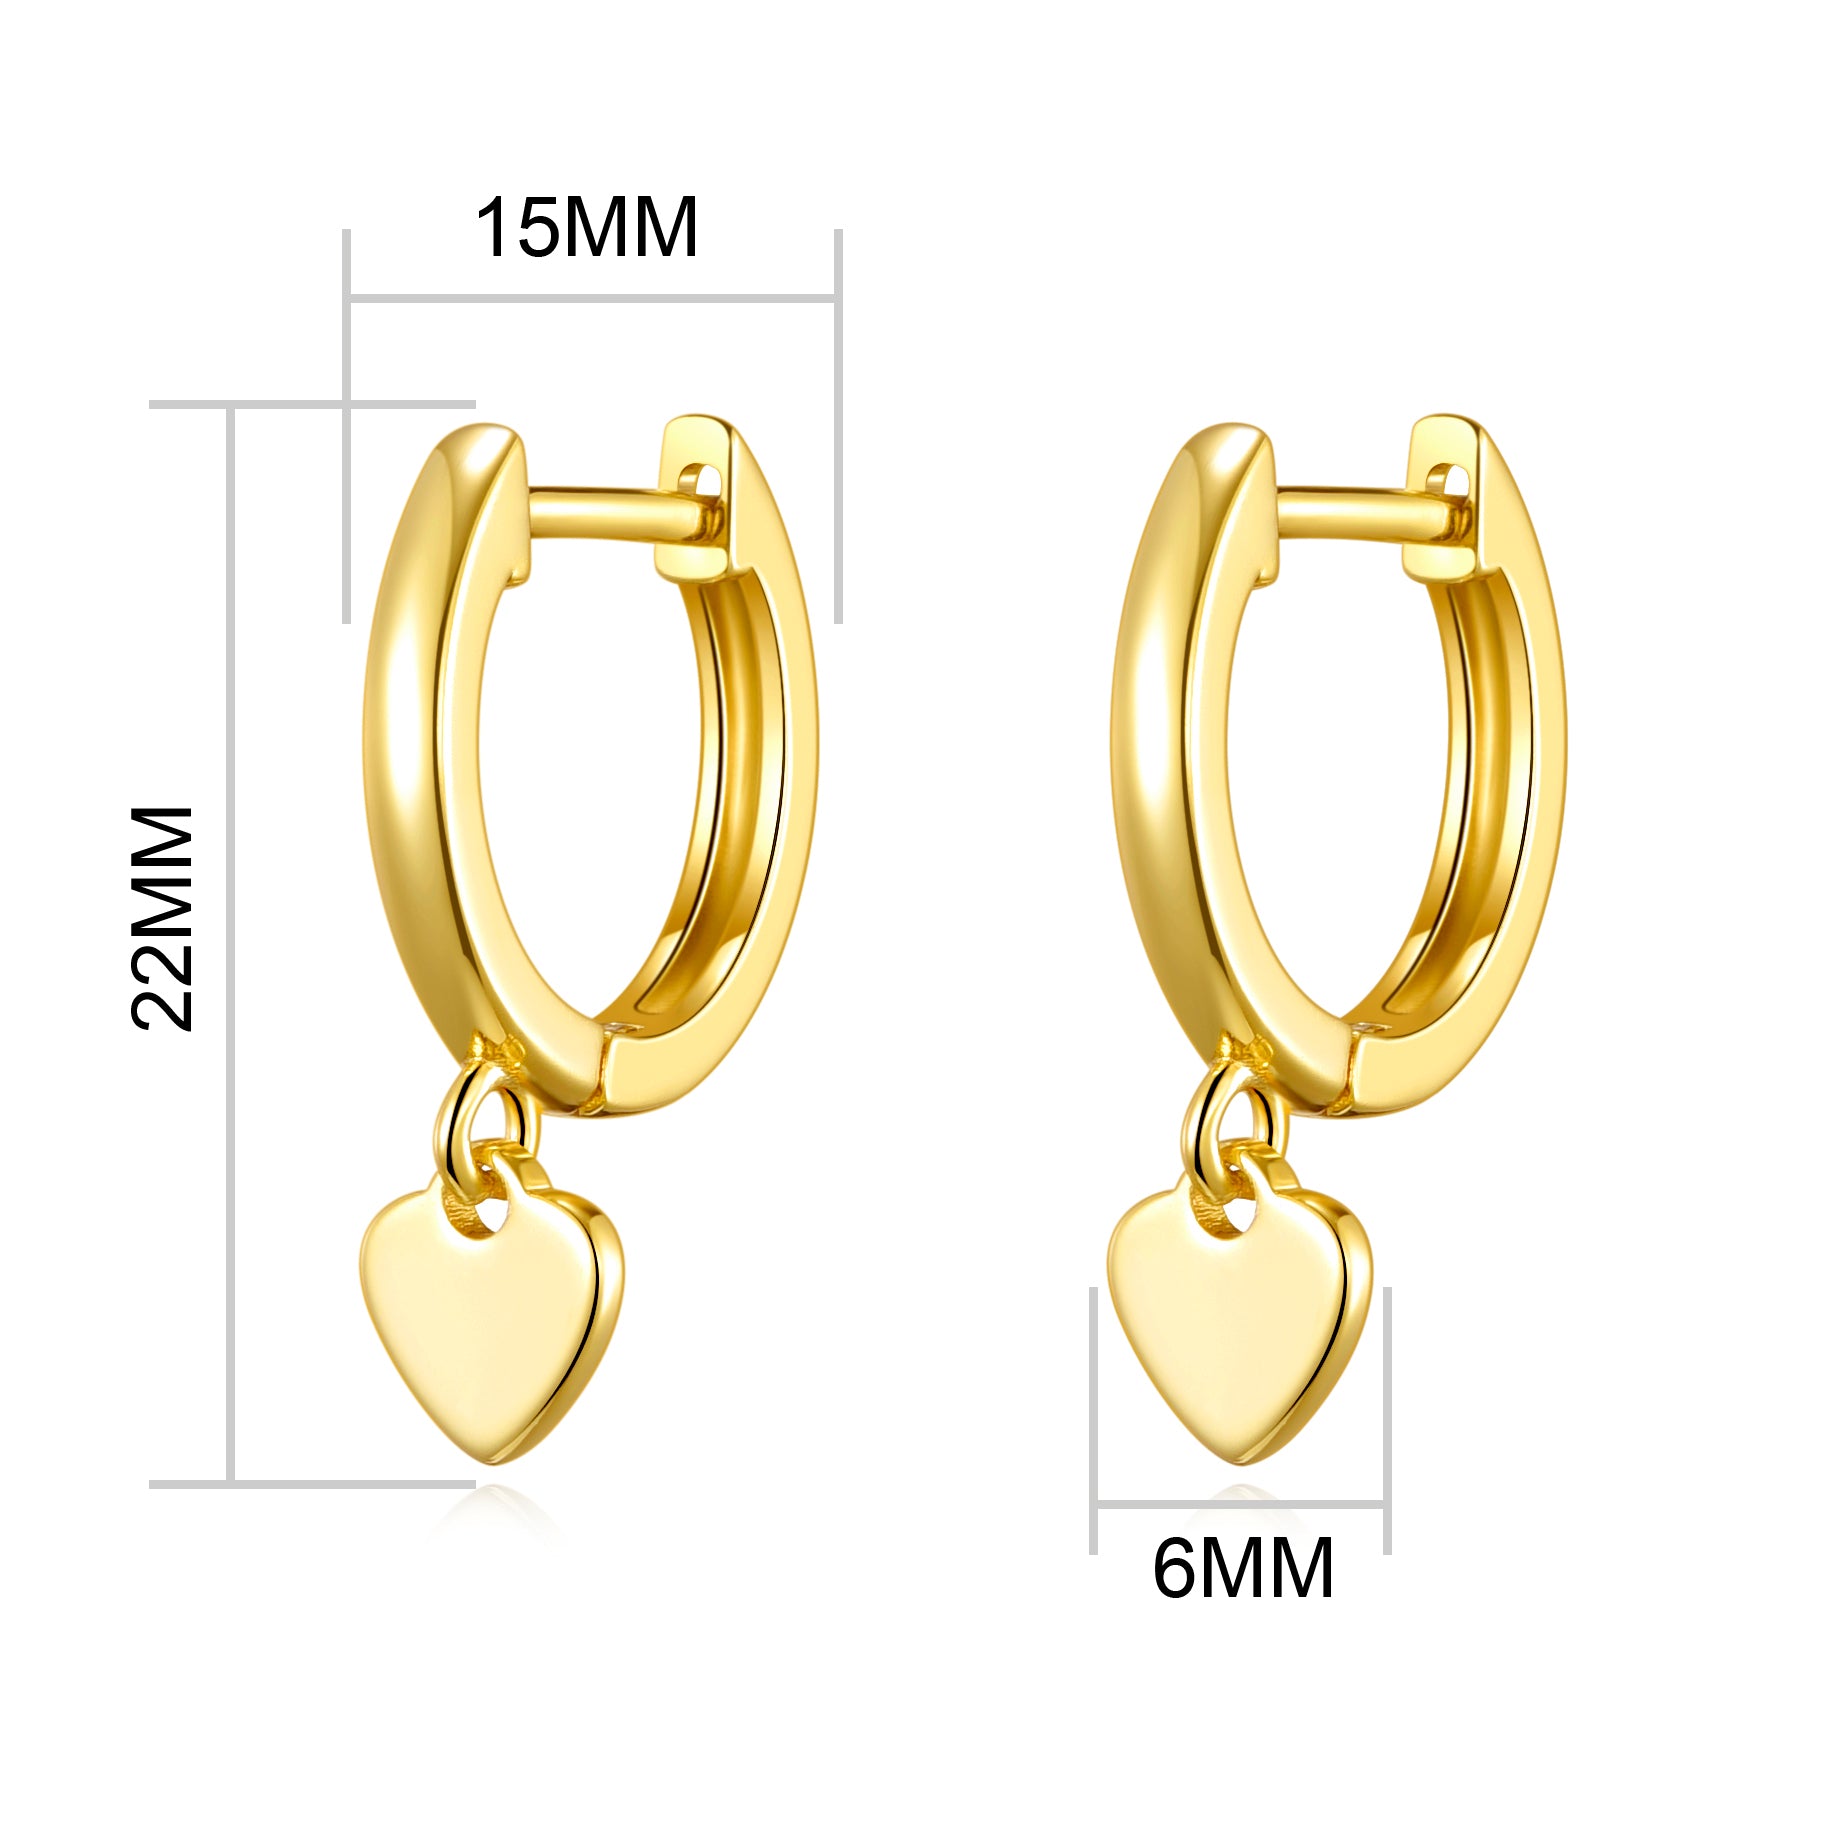 Gold Plated Heart Charm Hoop Earrings